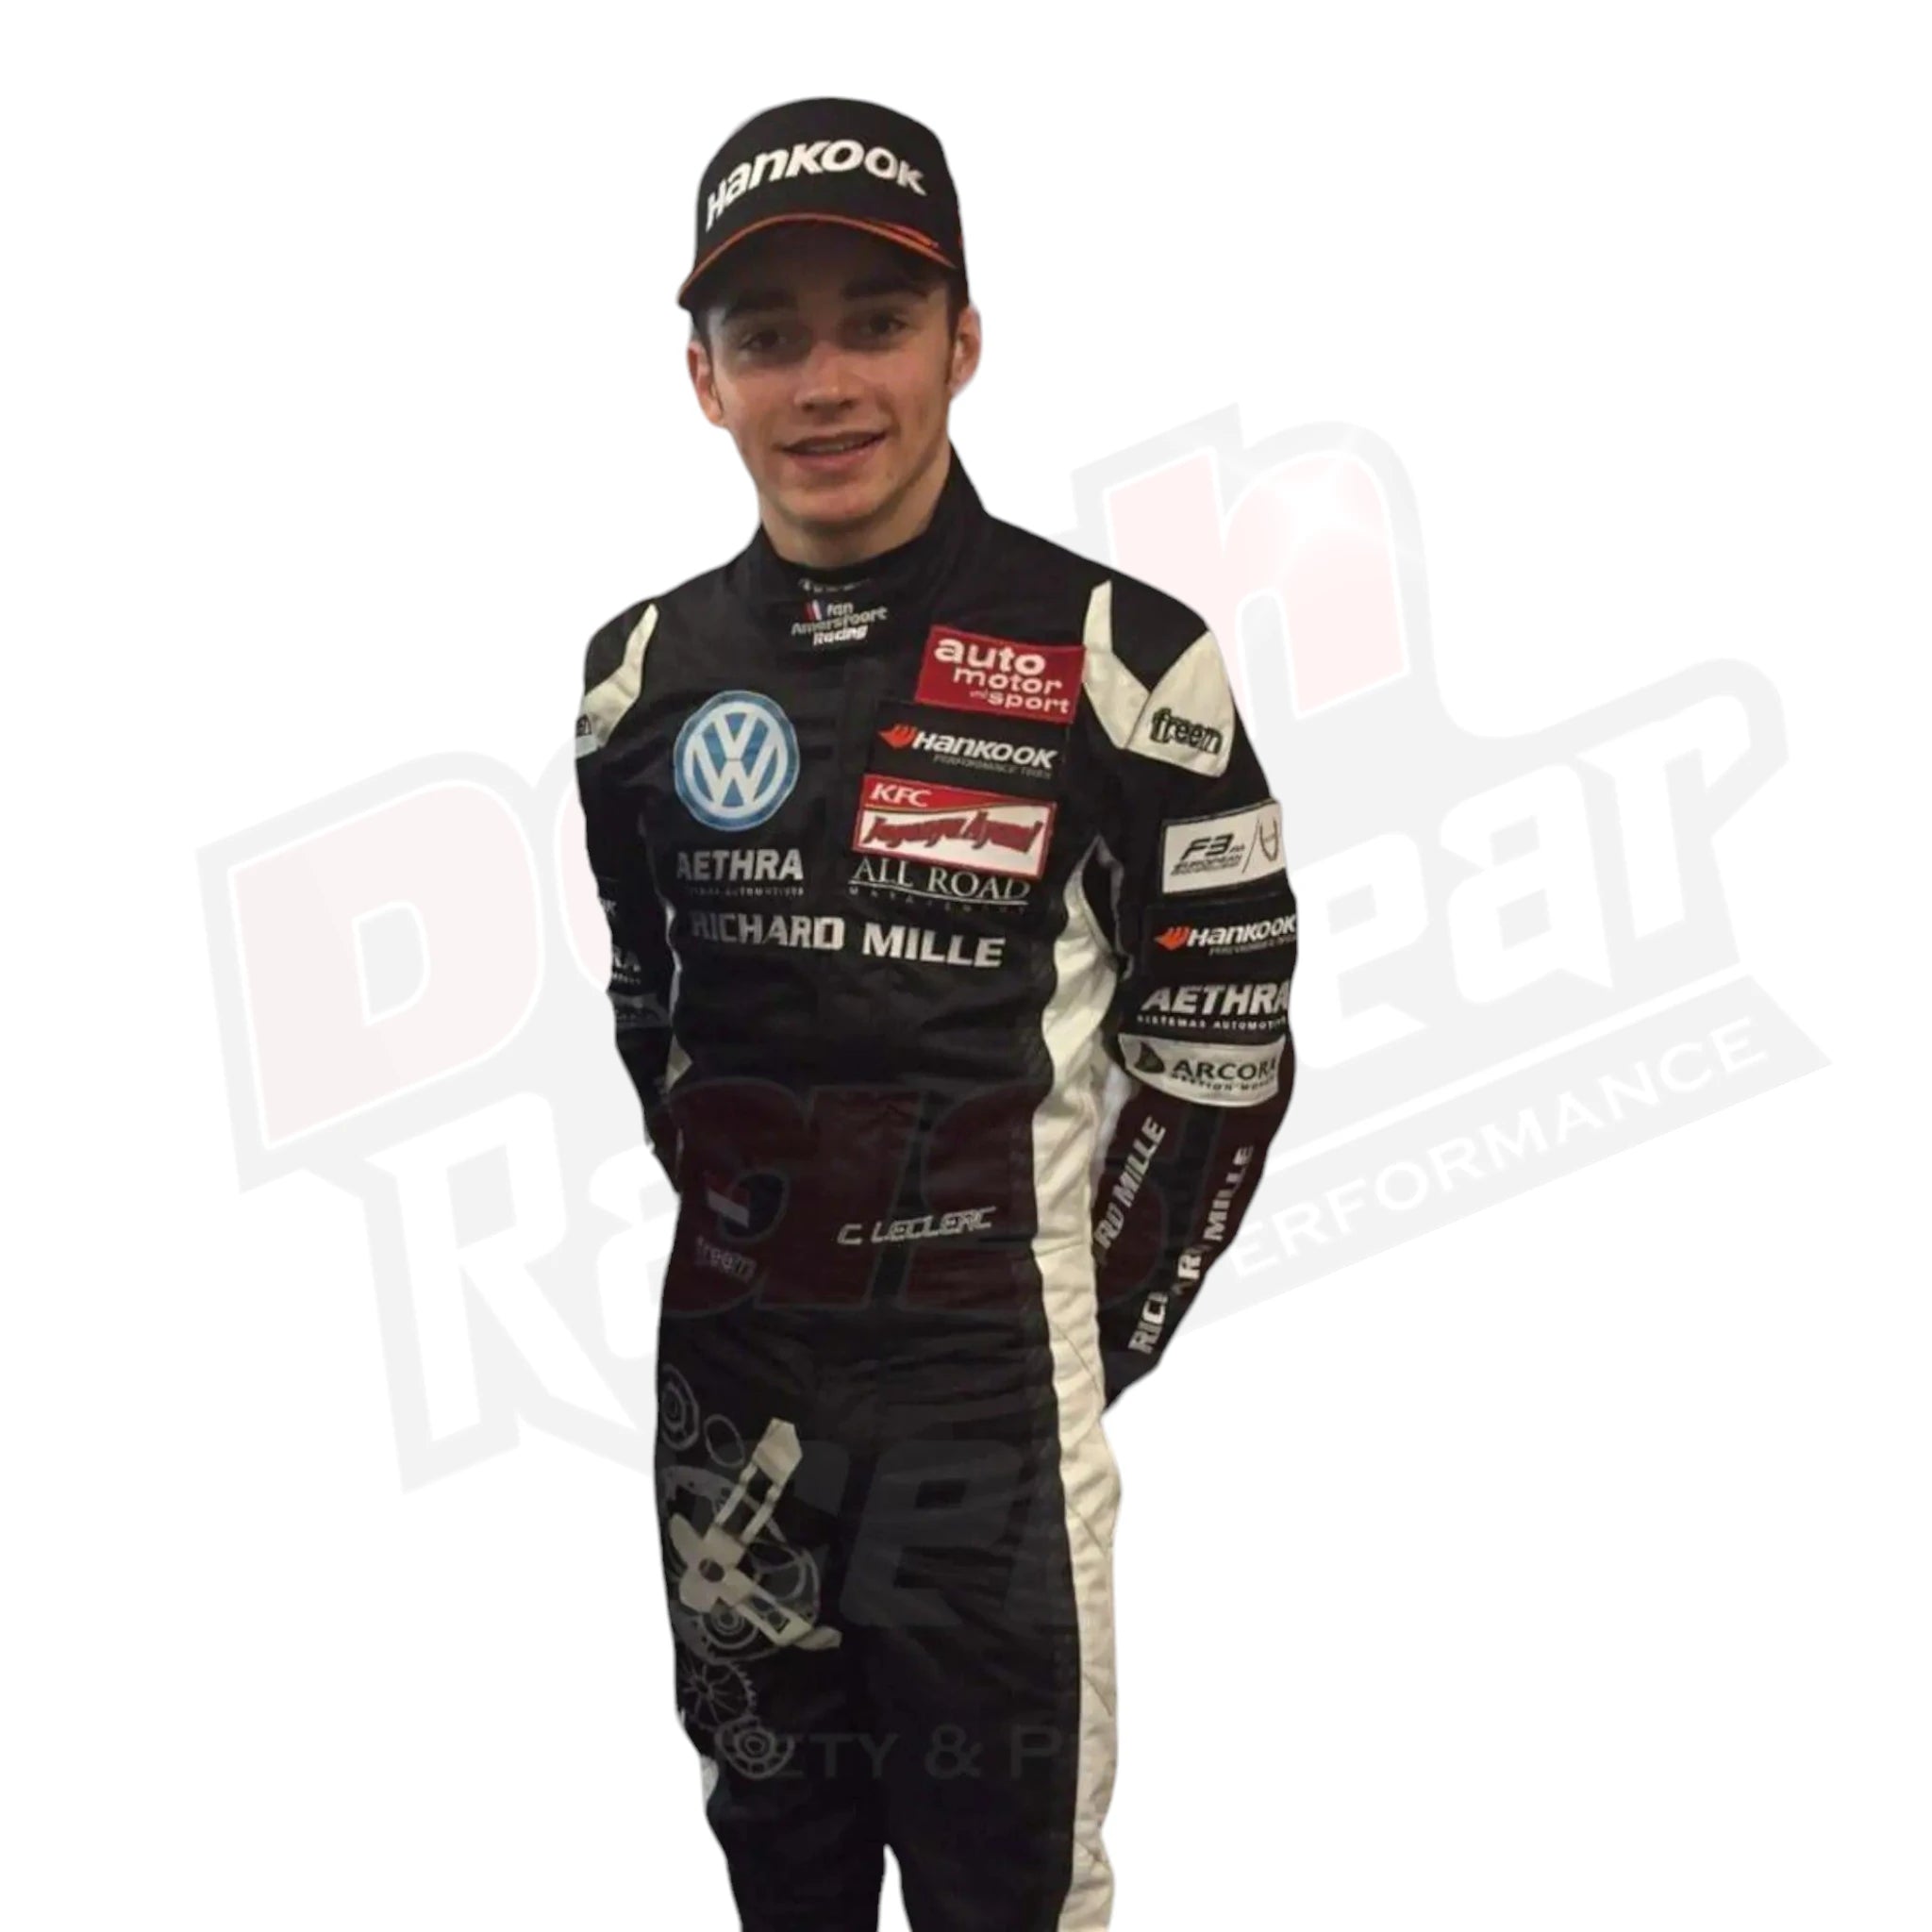 2015 Charles Leclerc Richard Mille F3 Race suit | Silverstone 